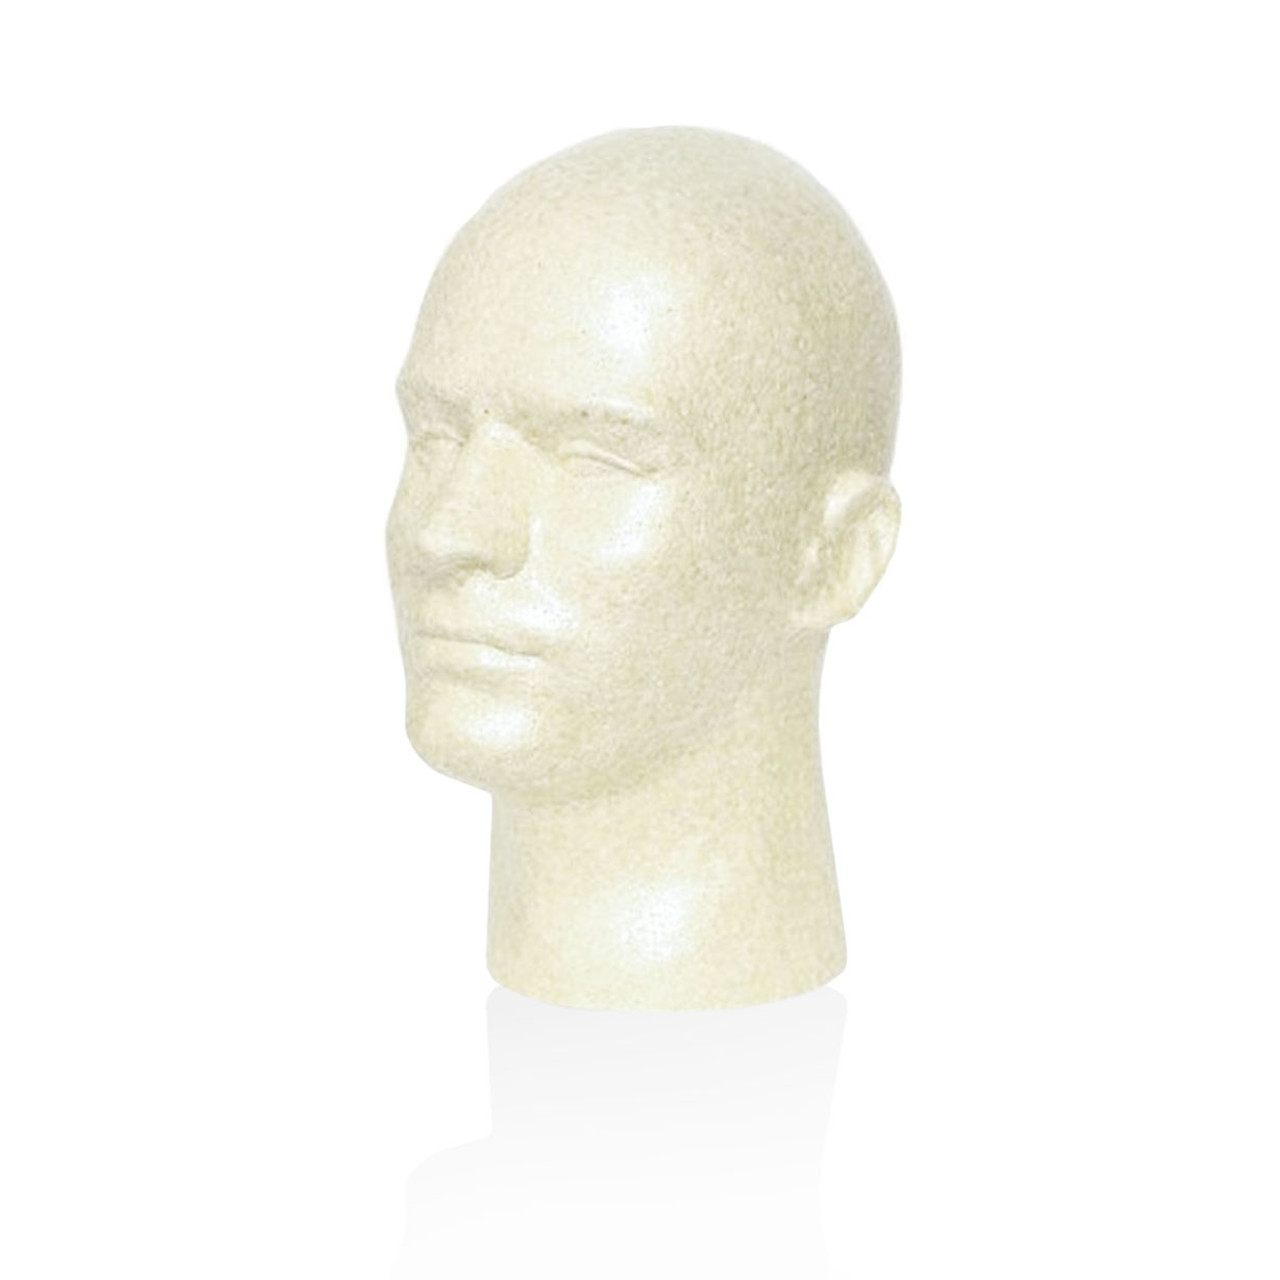 Hairess Men's Styrofoam Mannequin Head Beige